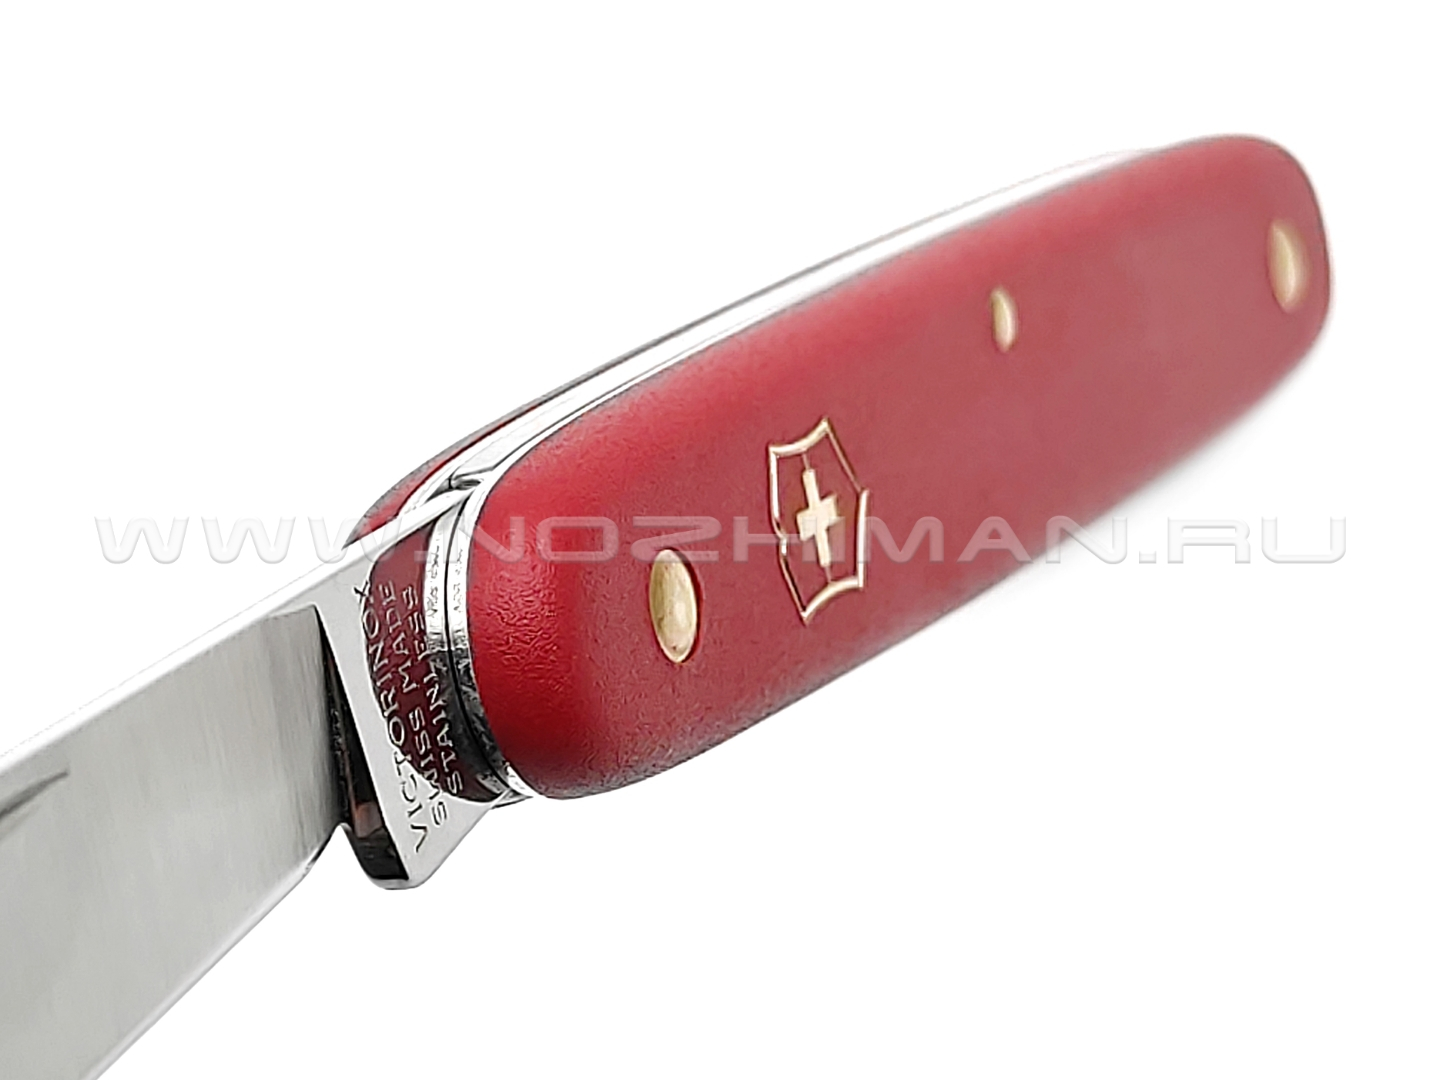 Нож Victorinox 3.9010 Budding knife Red сталь X55CrMo14, рукоять Nylon